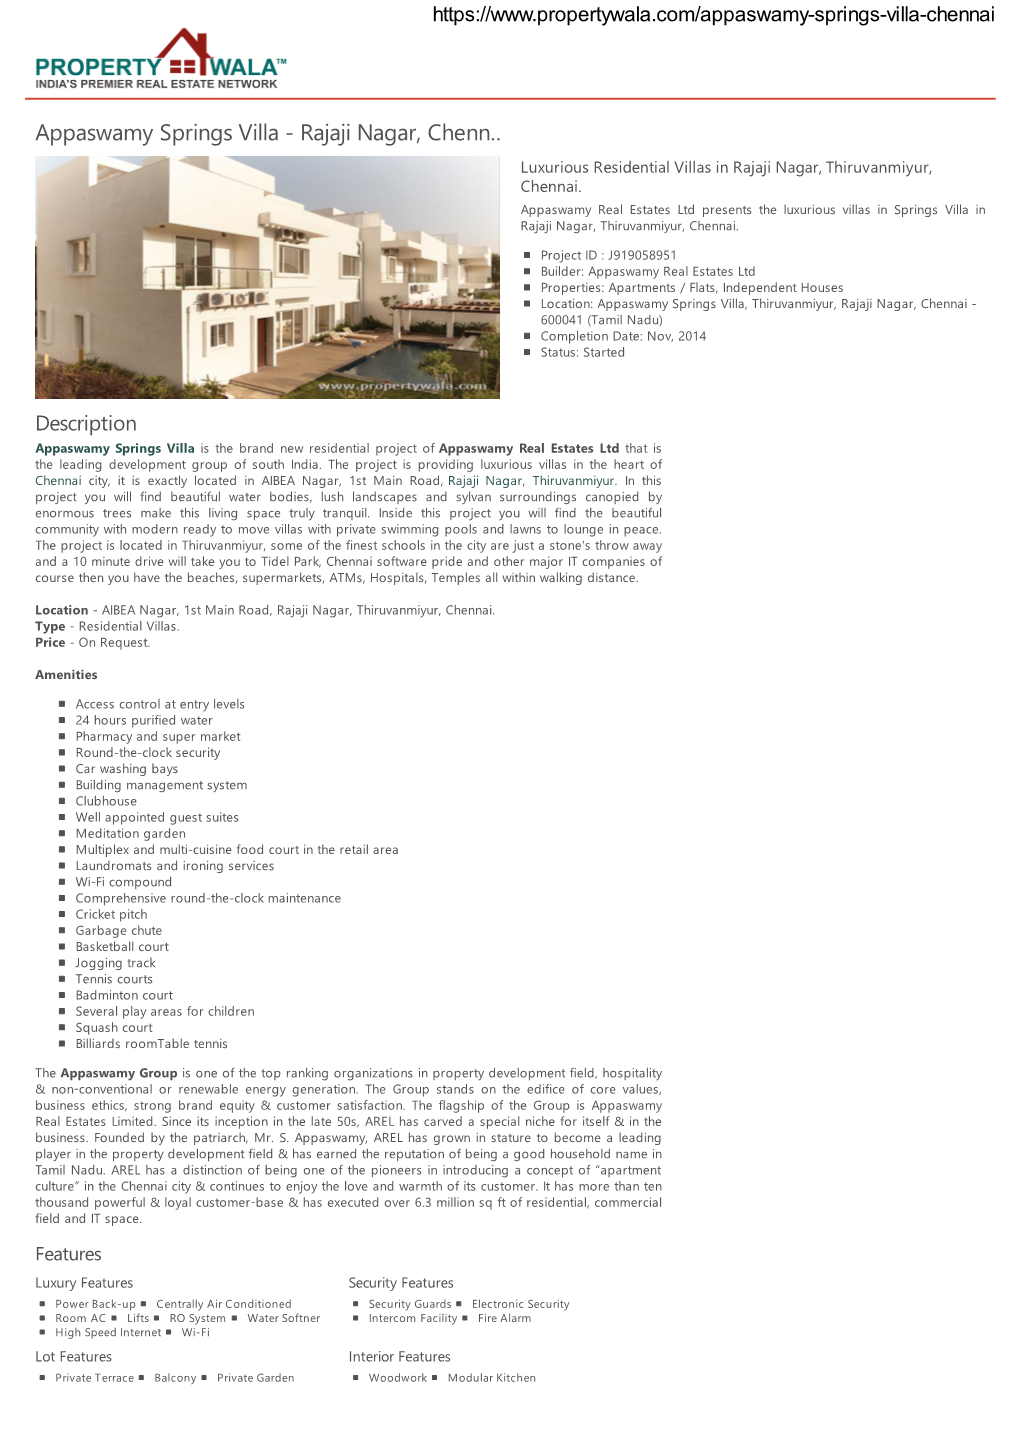 Appaswamy Springs Villa - Rajaji Nagar, Chenn… Luxurious Residential Villas in Rajaji Nagar, Thiruvanmiyur, Chennai